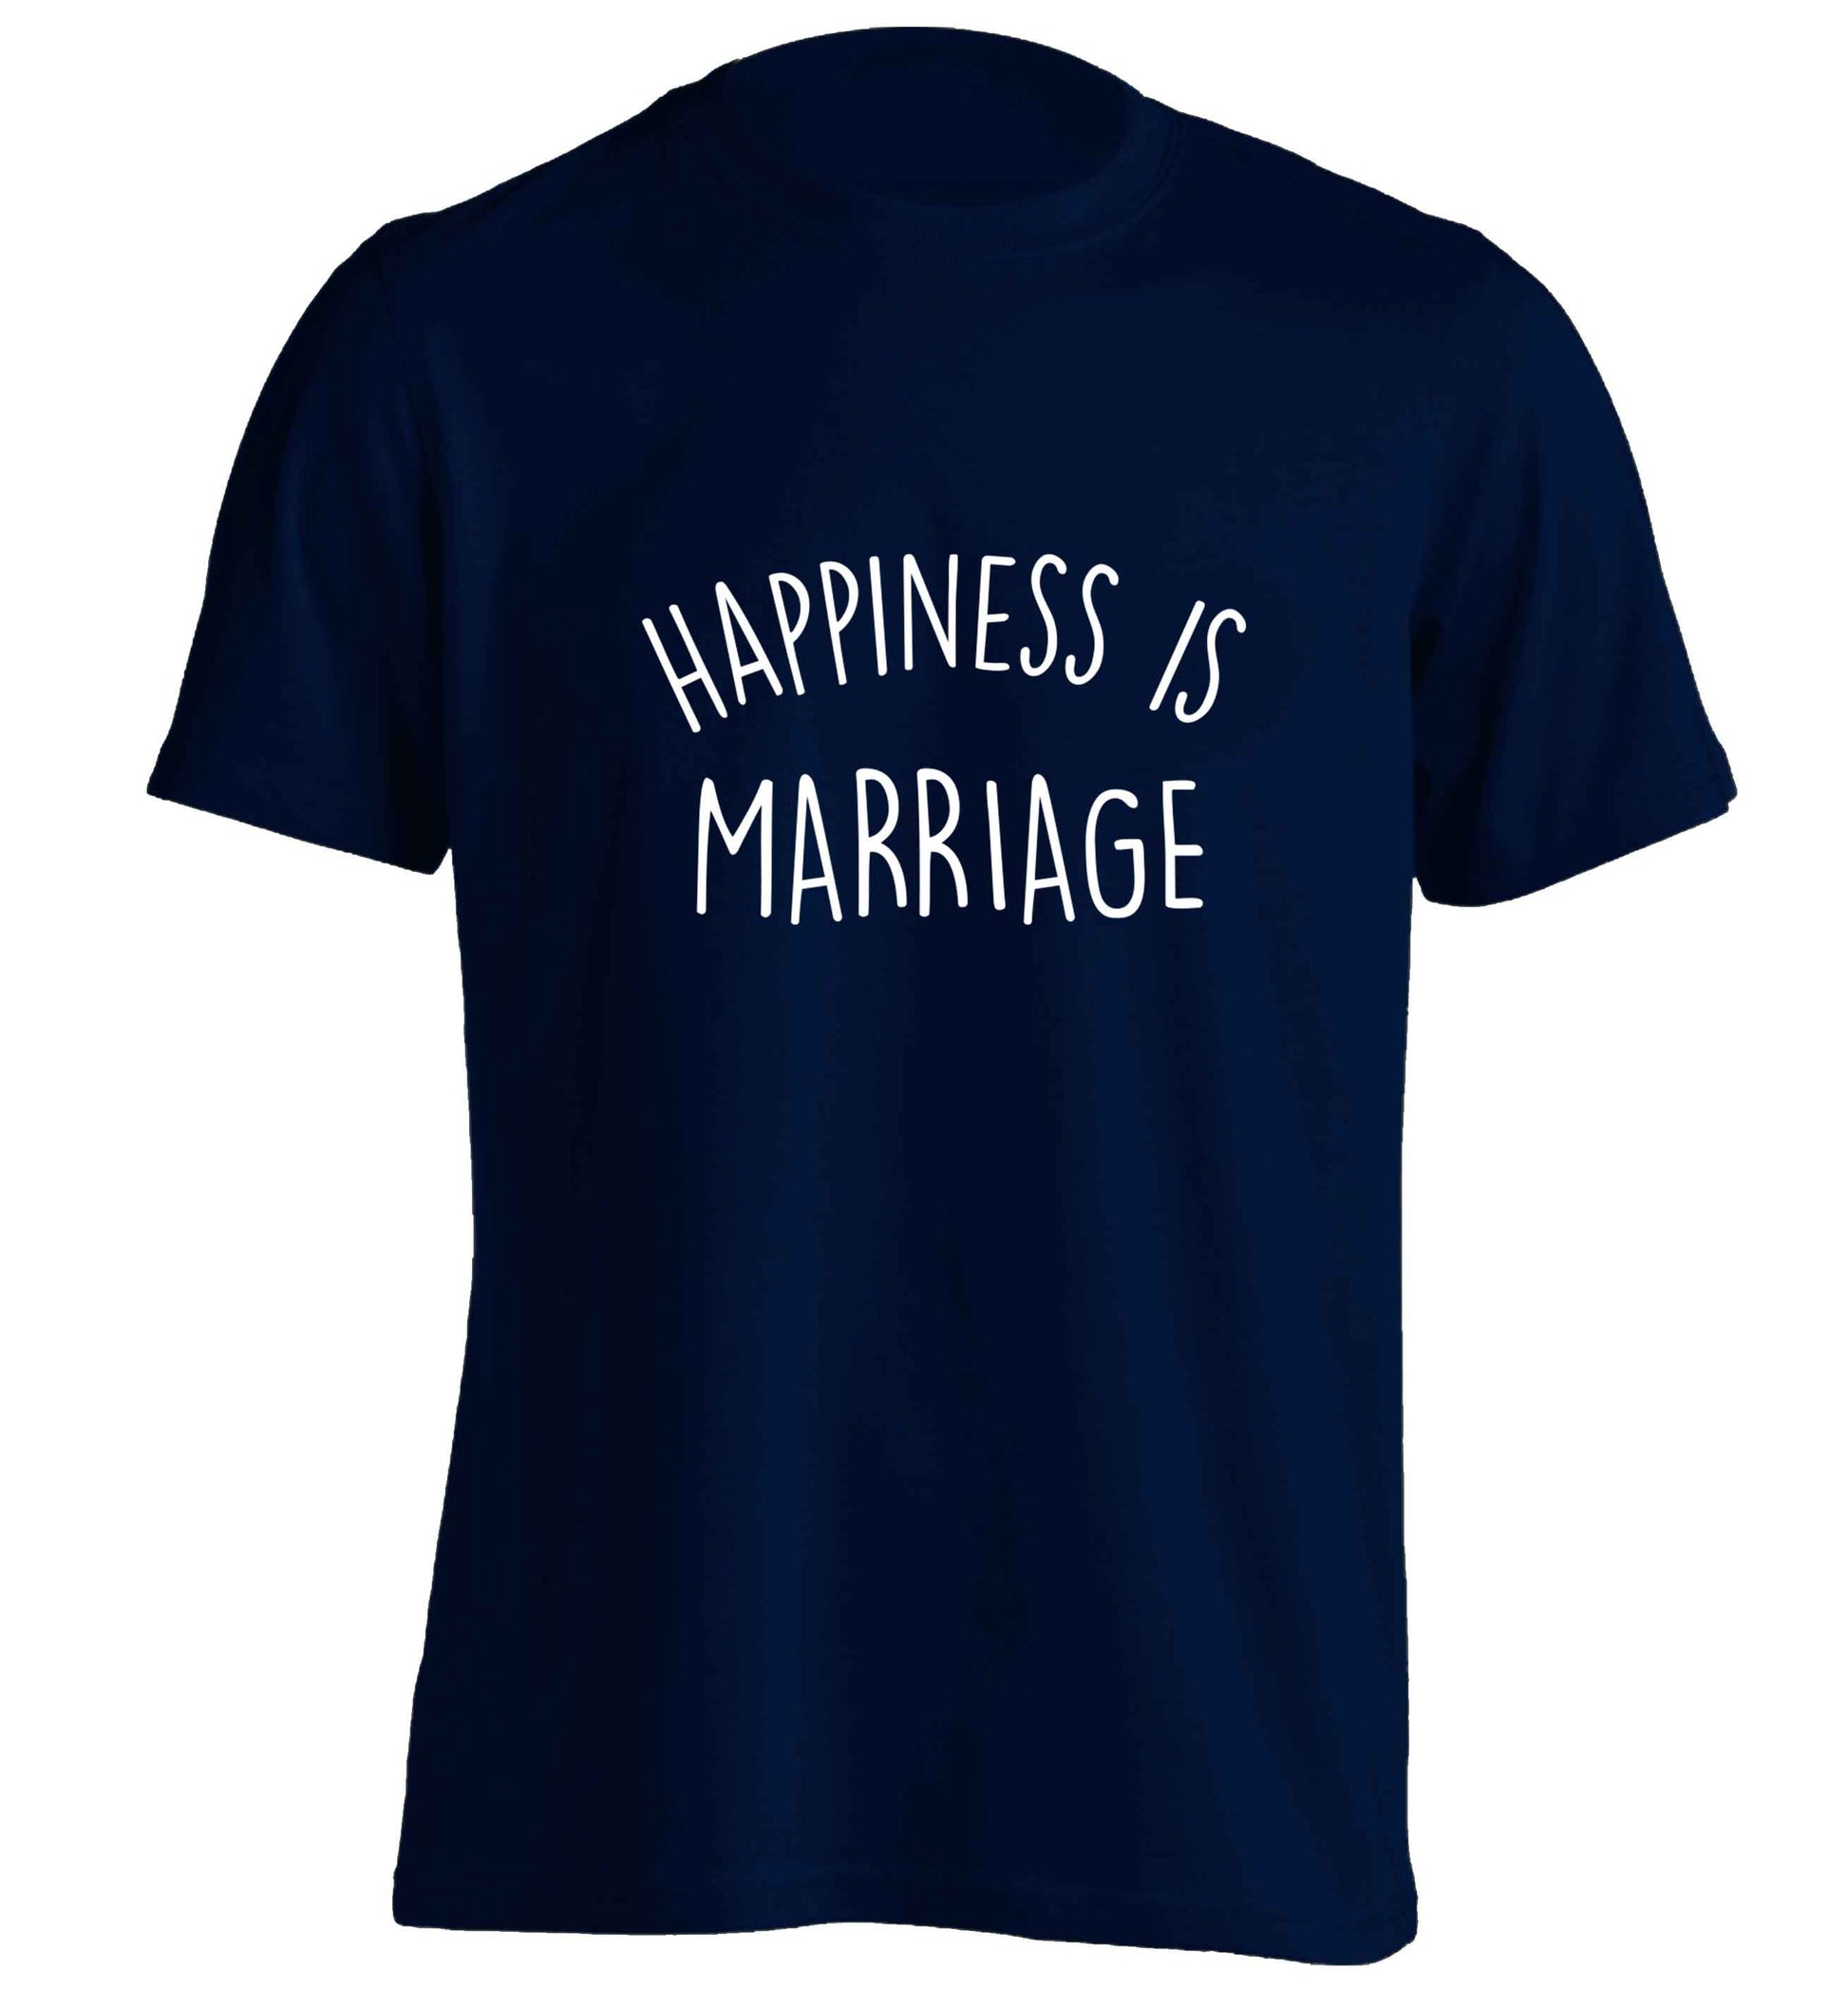 Happiness is wedding planning adults unisex navy Tshirt 2XL